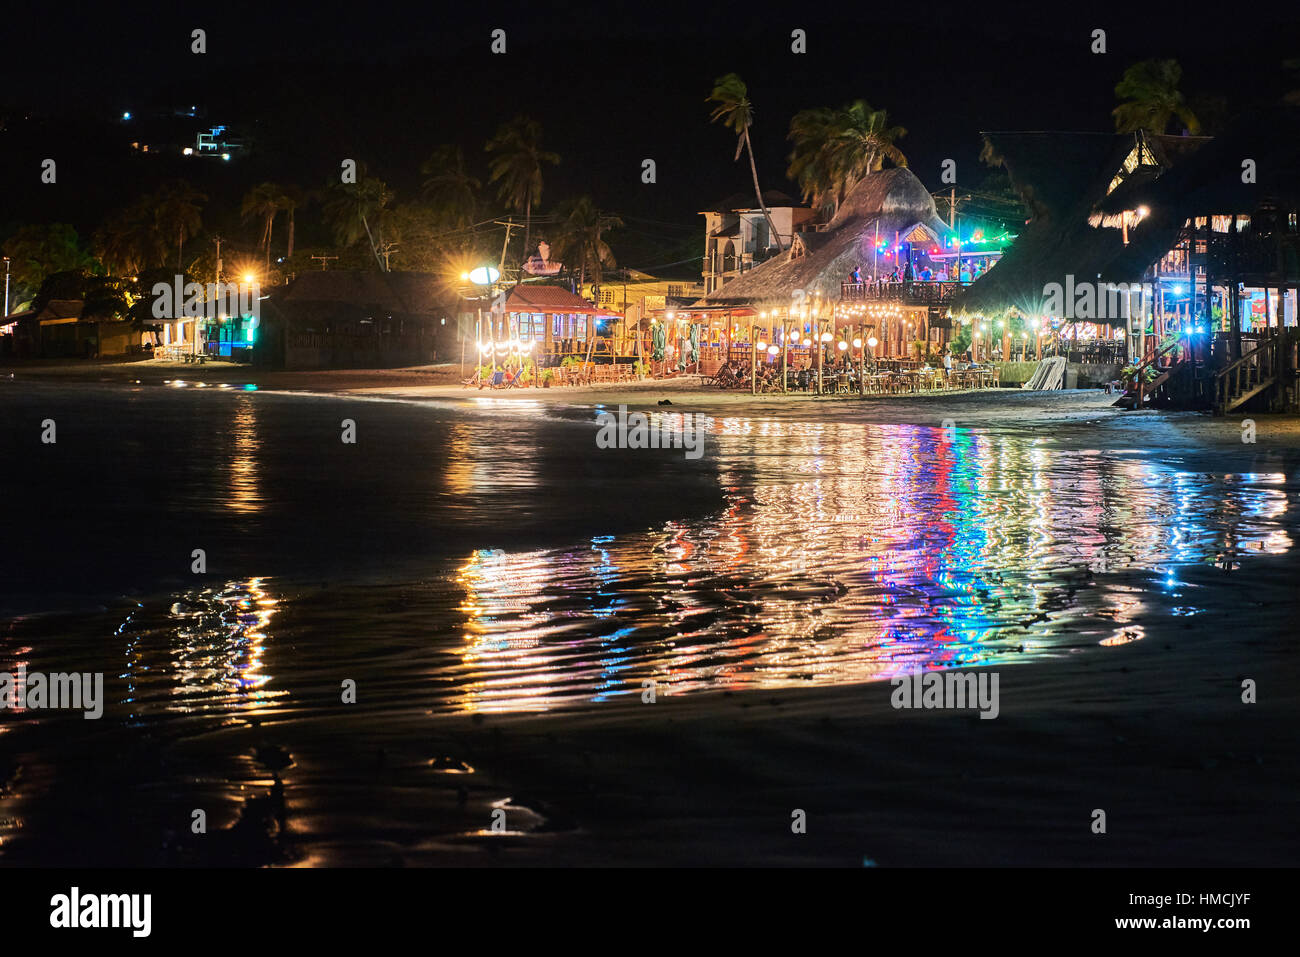 restourants lights on beach at night in tropics Stock Photo